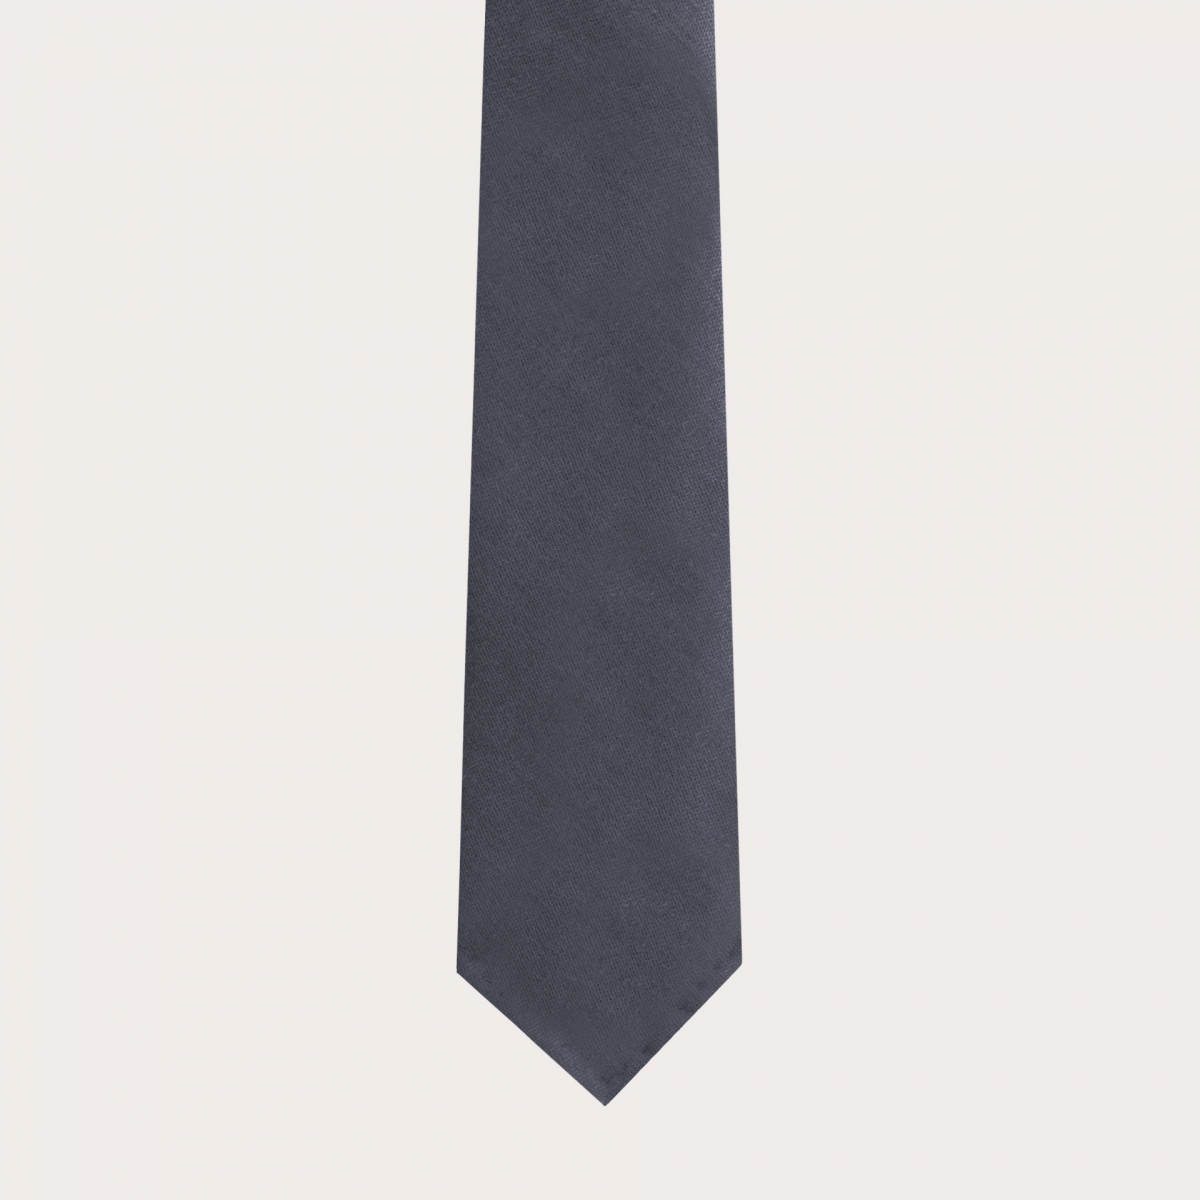 Unlined tie in virgin wool and hemp, dark grey